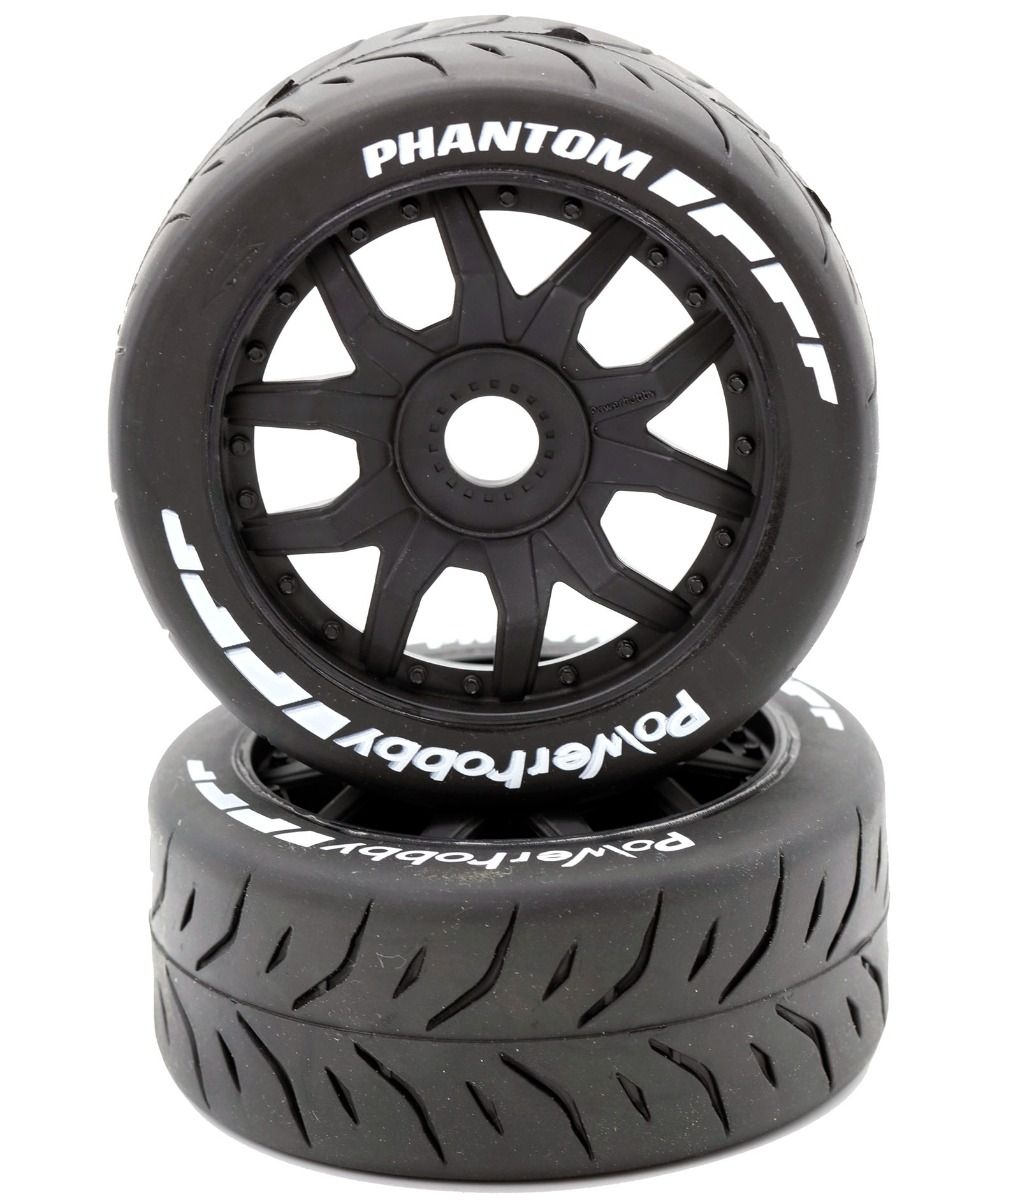 Power Hobby - 1/8 GT Phantom Belted Mounted Tires, Medium Compound, 17mm Black Wheels